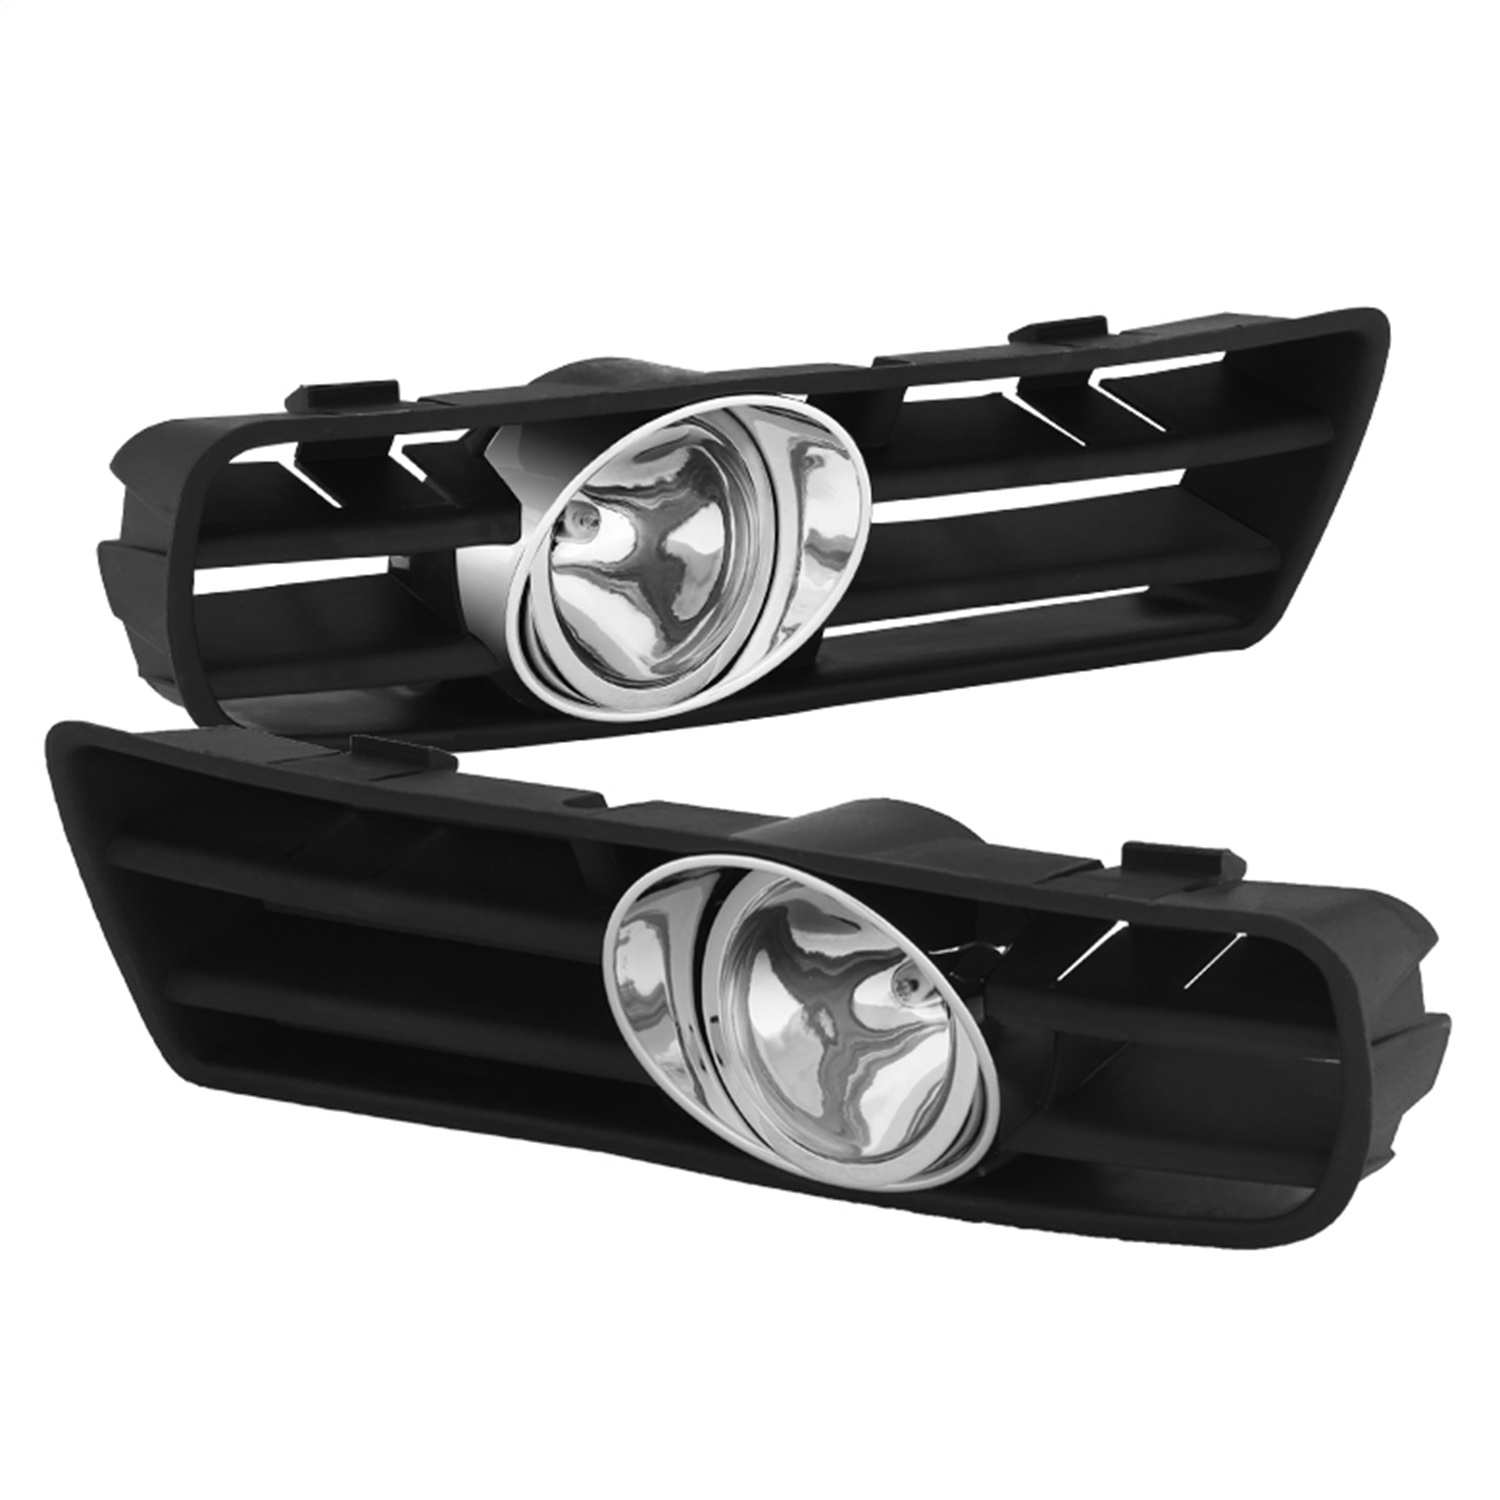 Spyder Auto 5076229 Fog Lights Fits 99-04 Golf